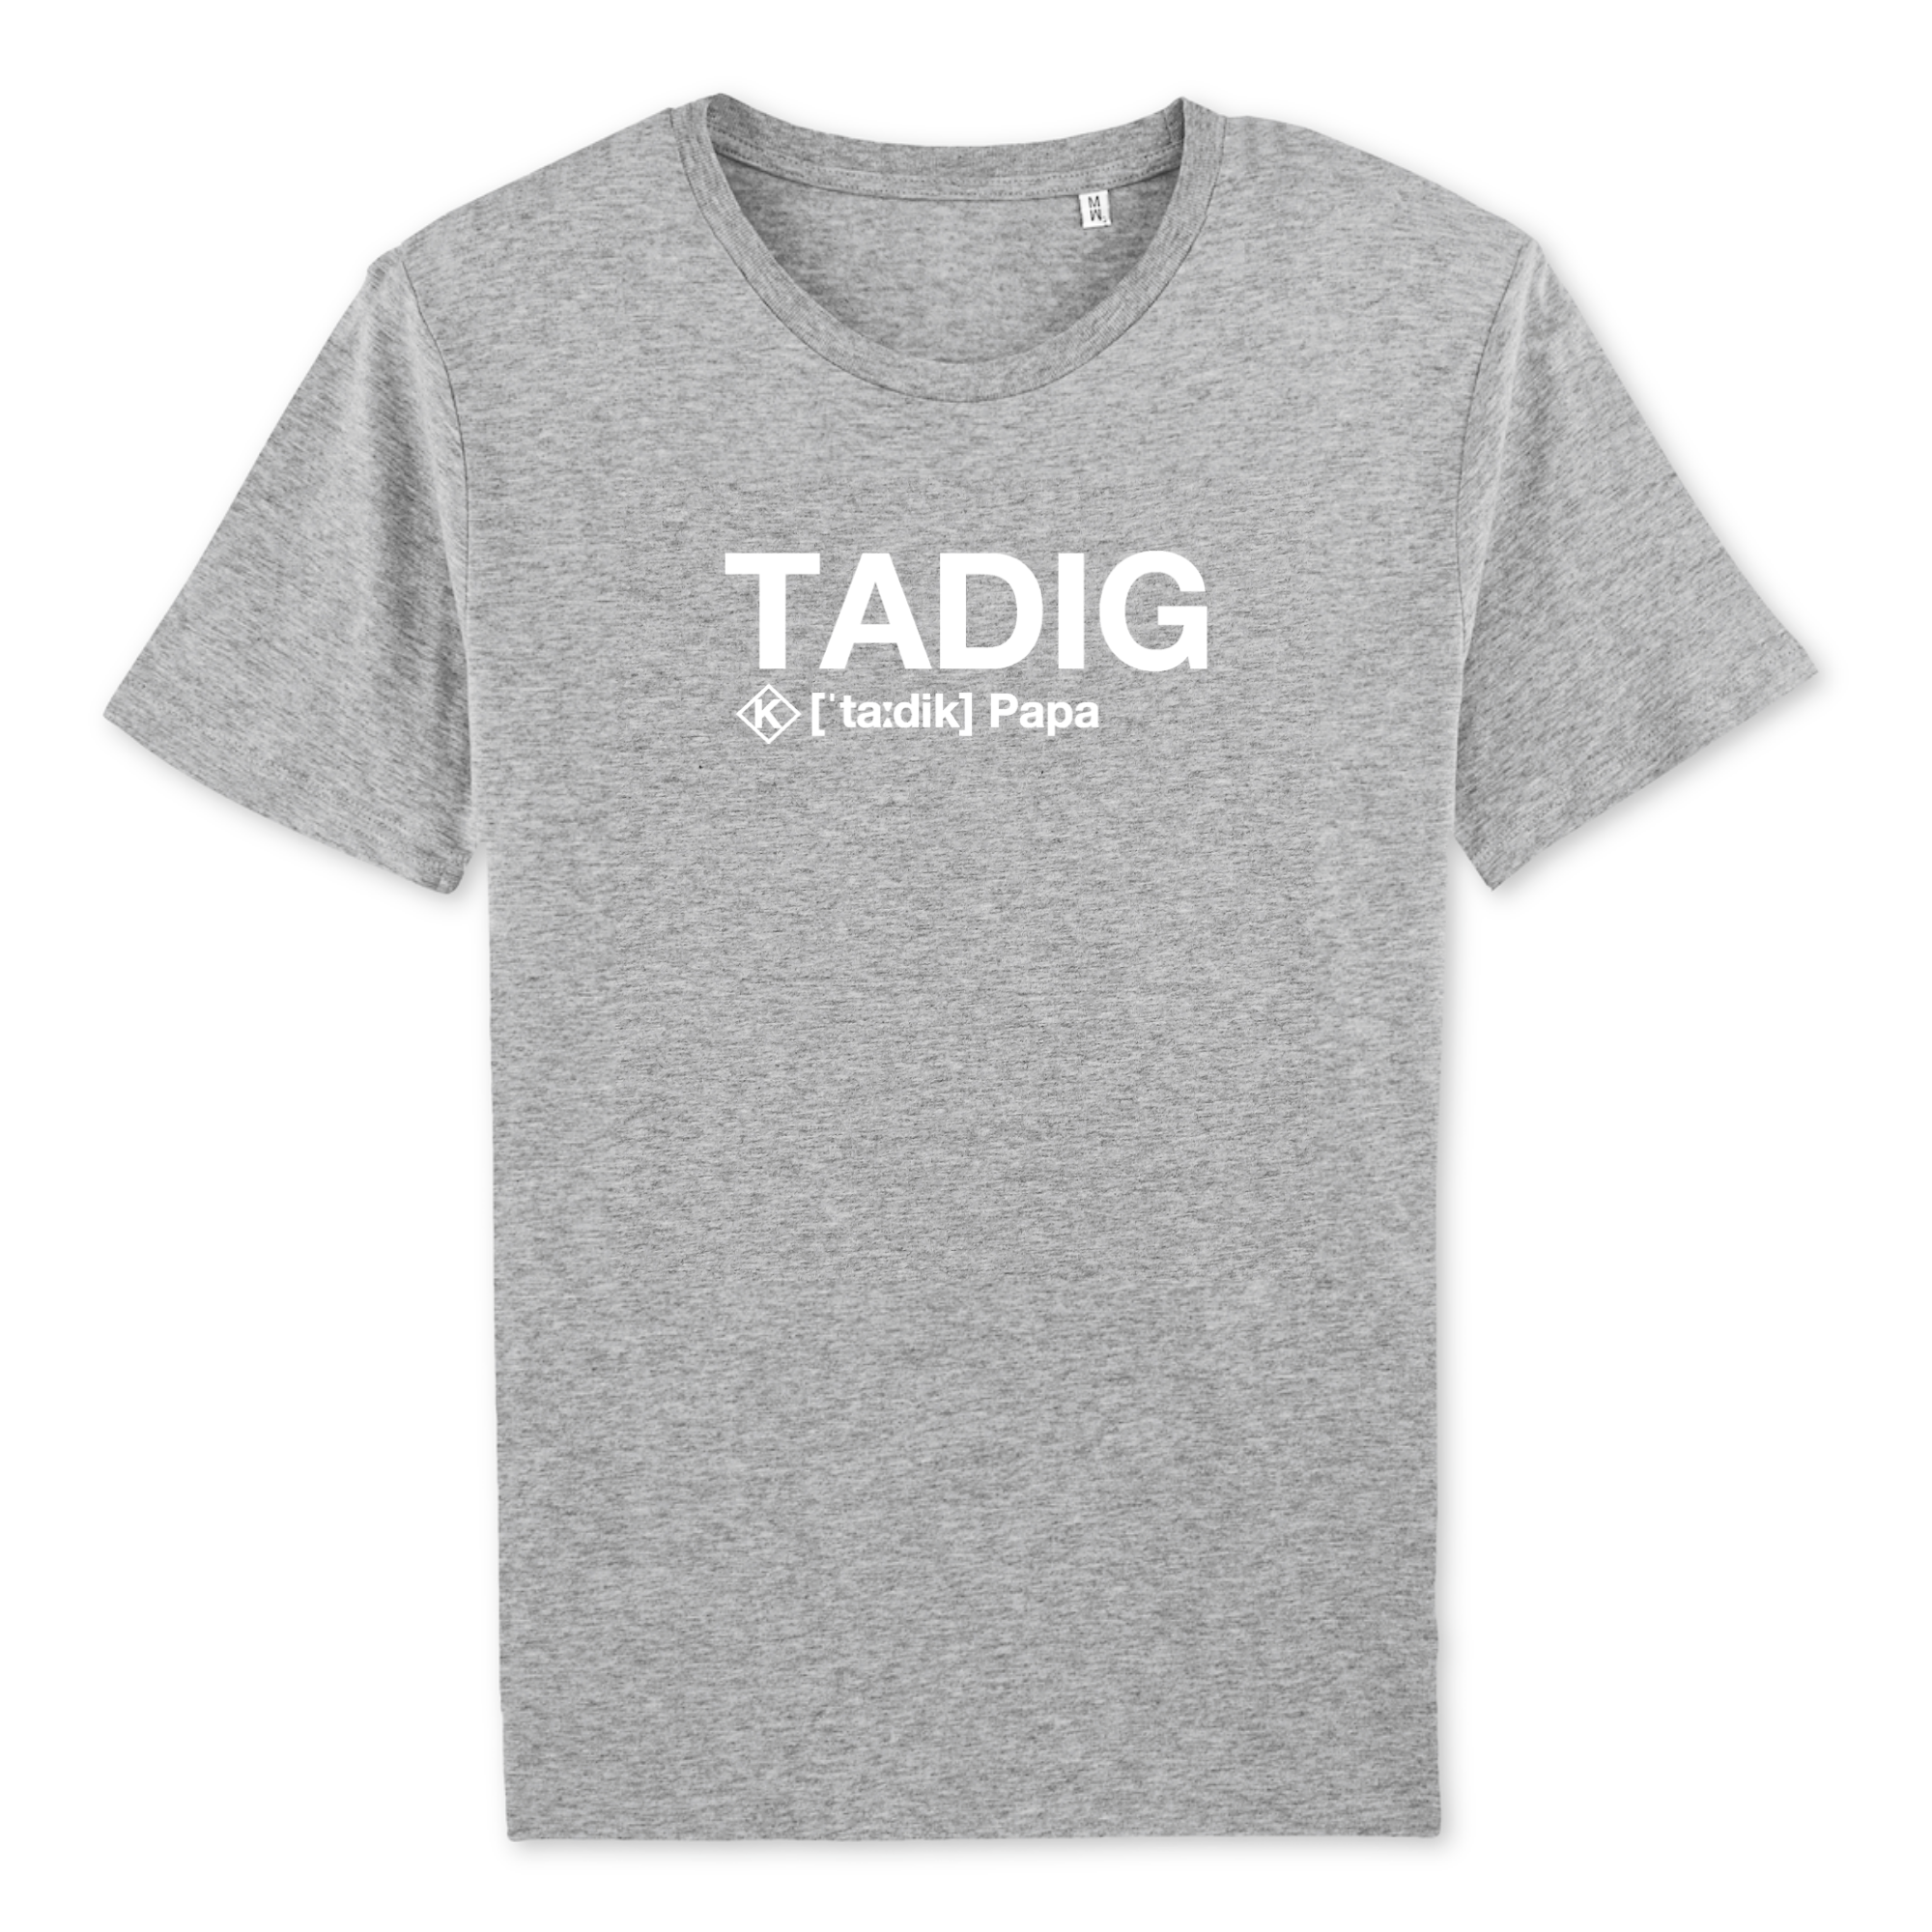 Tadig T-shirt (Papa)